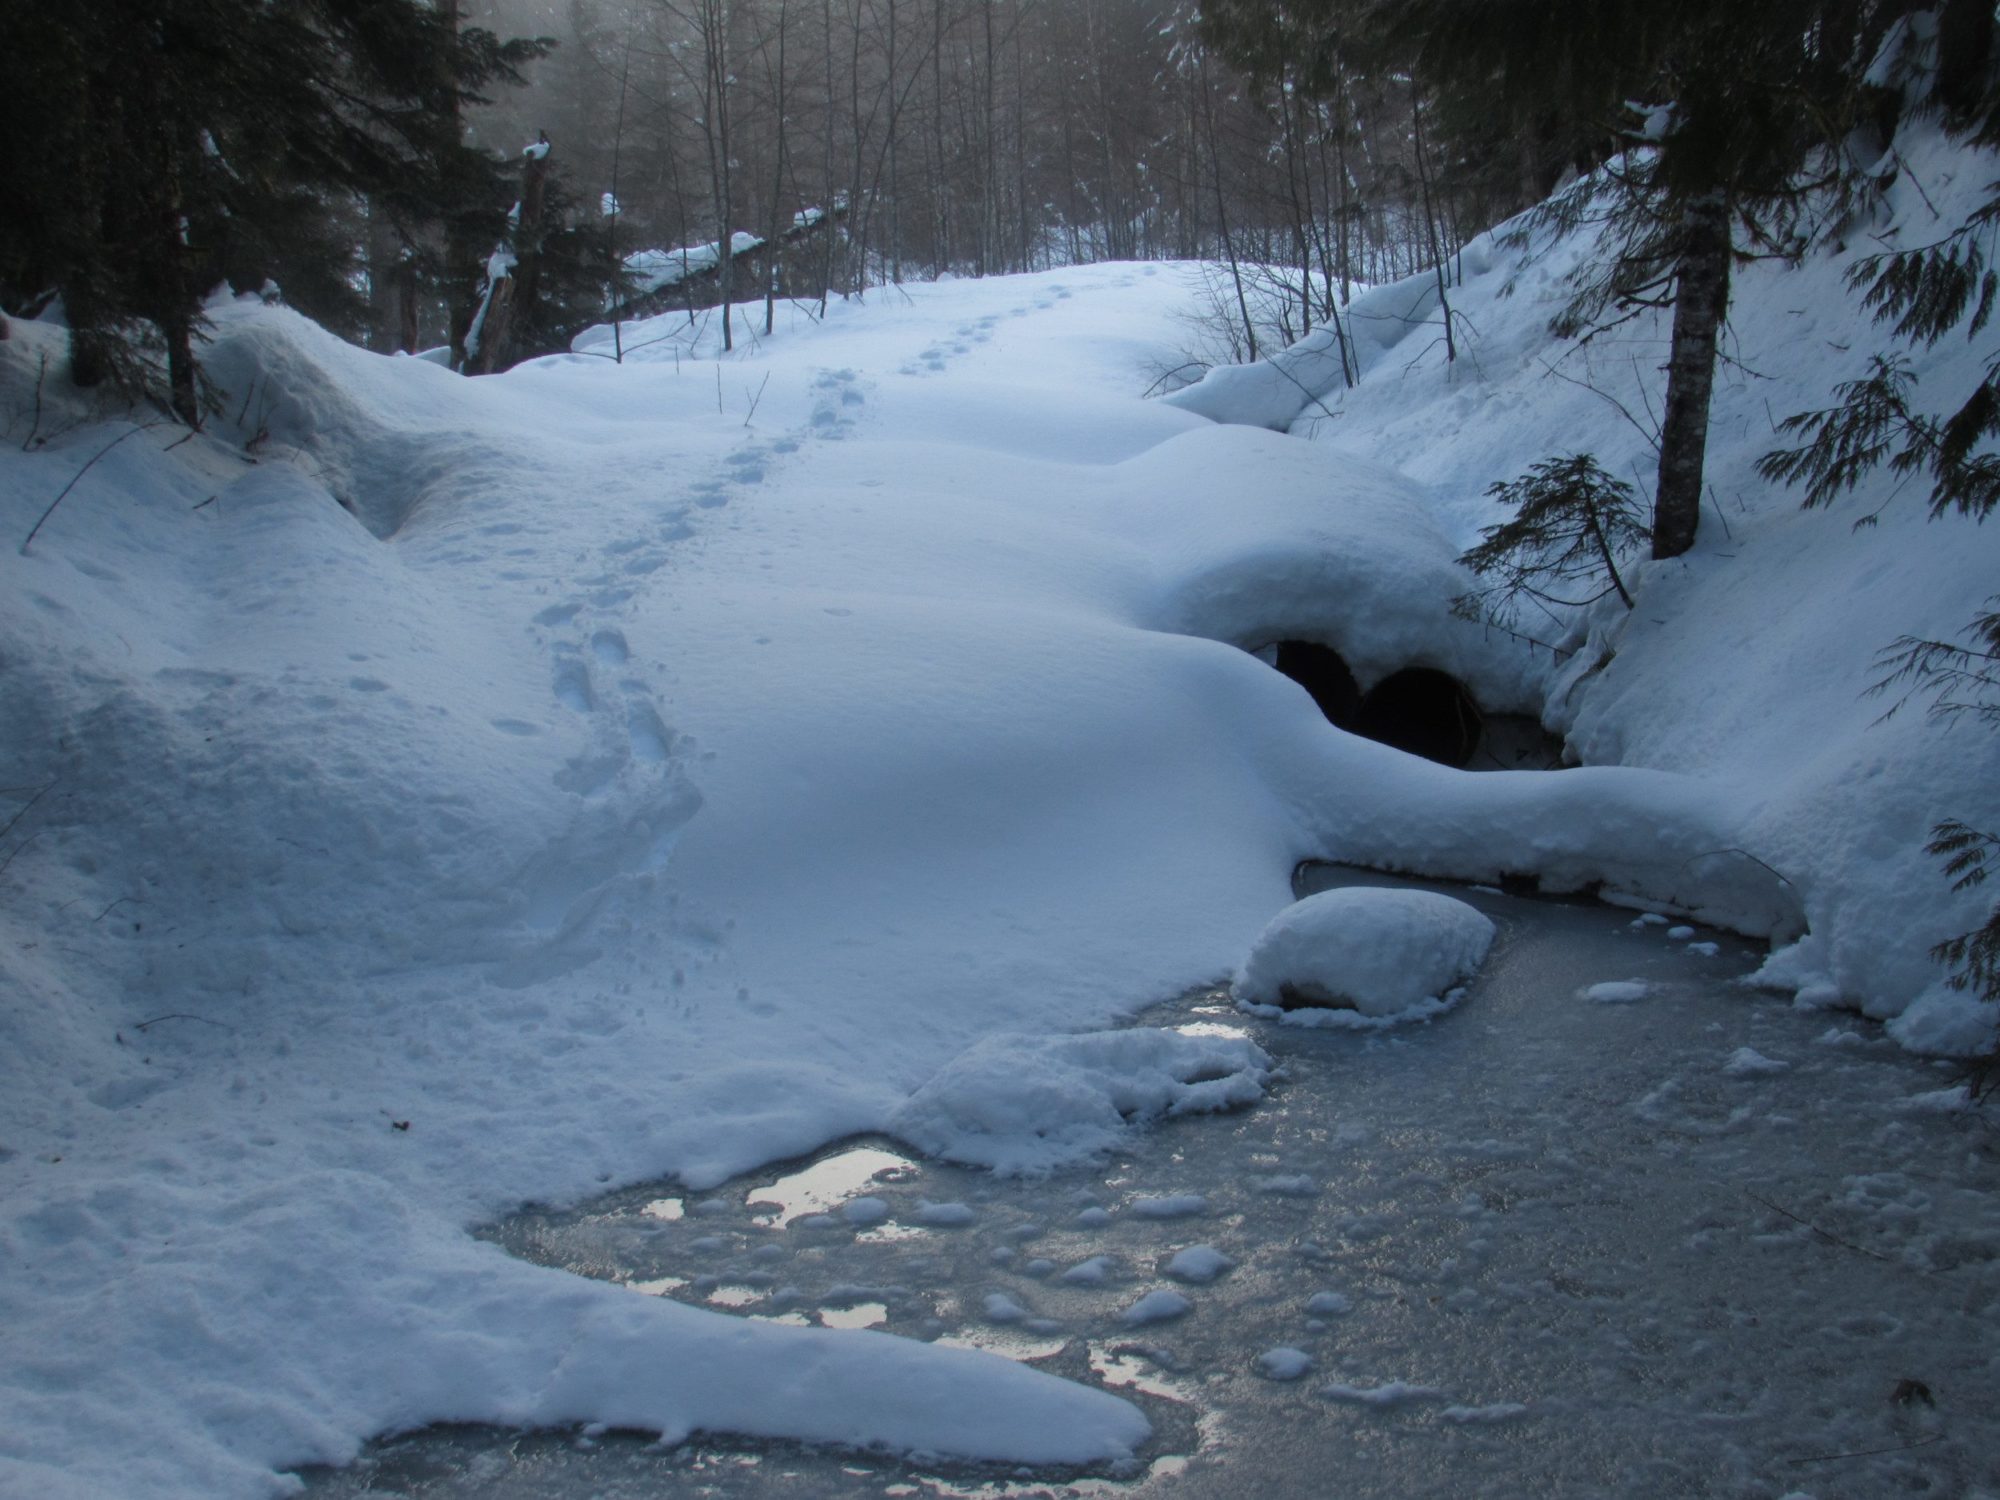 solitary snowshoe tracks barlow pass